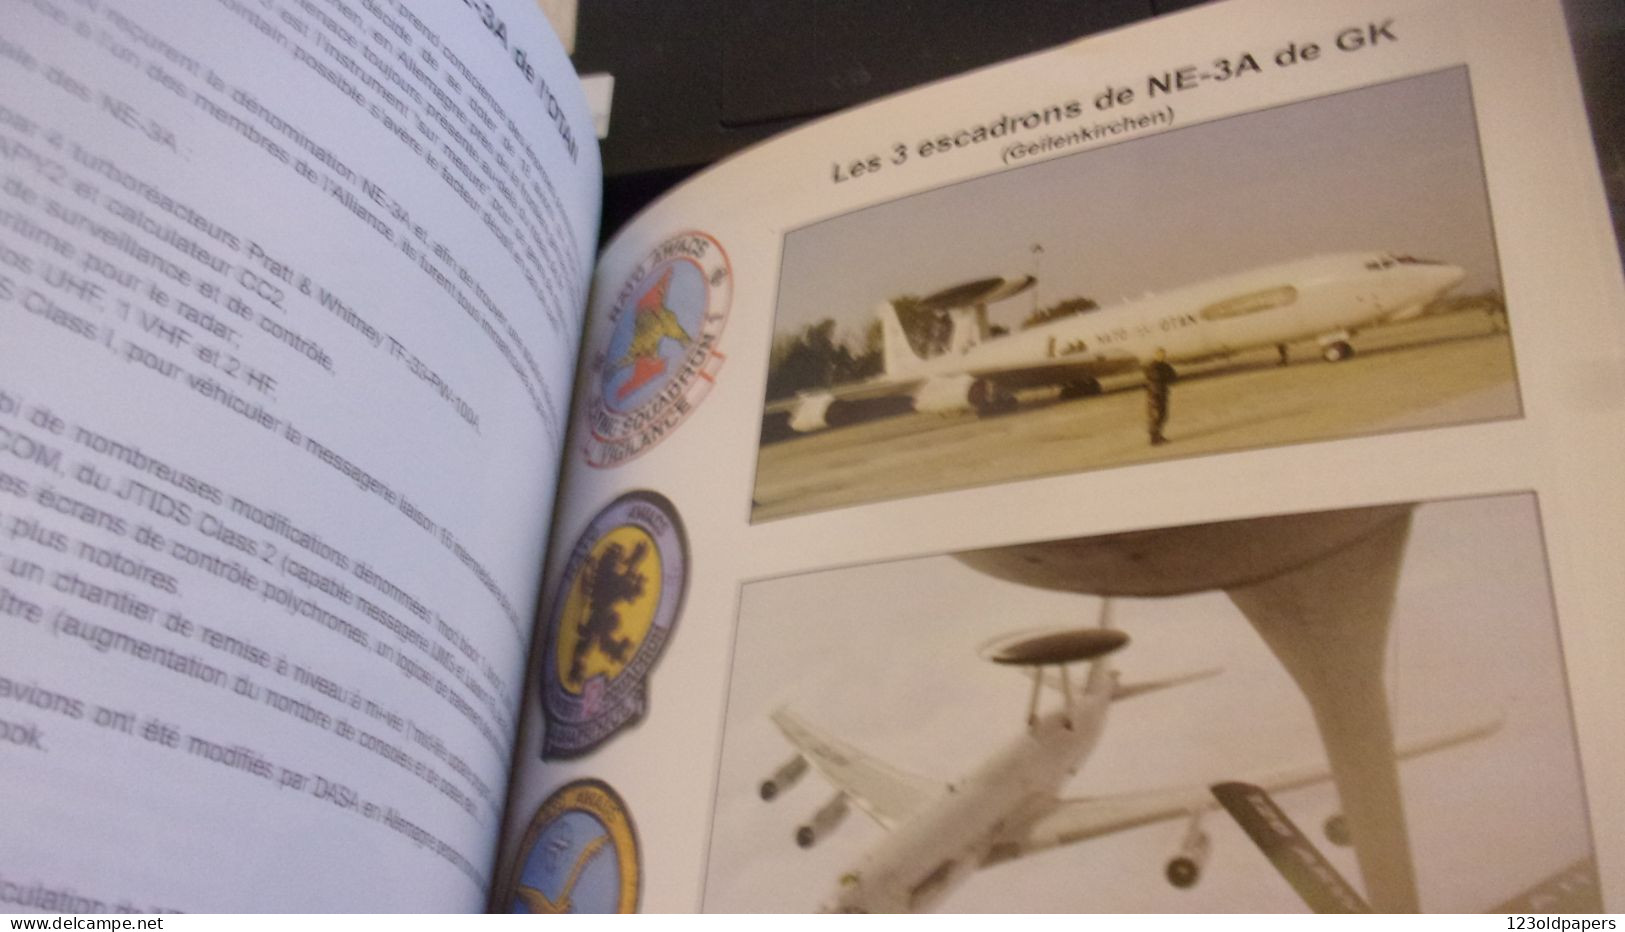 LE 36 BERRY AVORD OUVRAGE COLLECTIF 333 PAGES ESCADRON DEETECTION CONTROLE AEROPORTES E3F BA 702